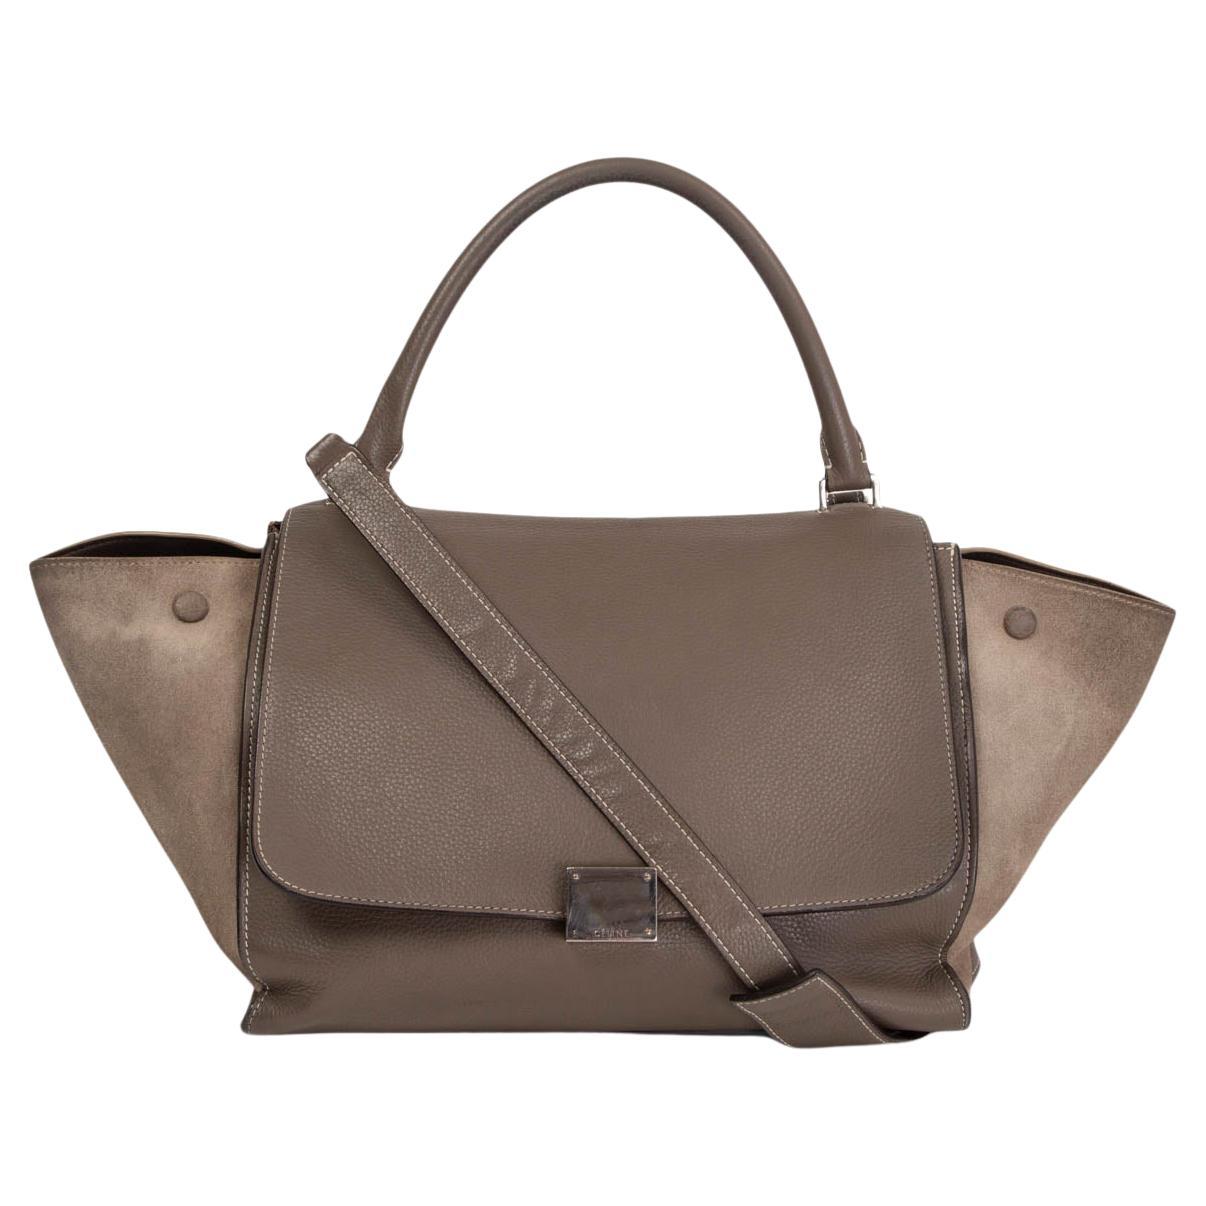 CELINE taupe leather & suede TRAPEZE MEDIUM Shoulder Bag